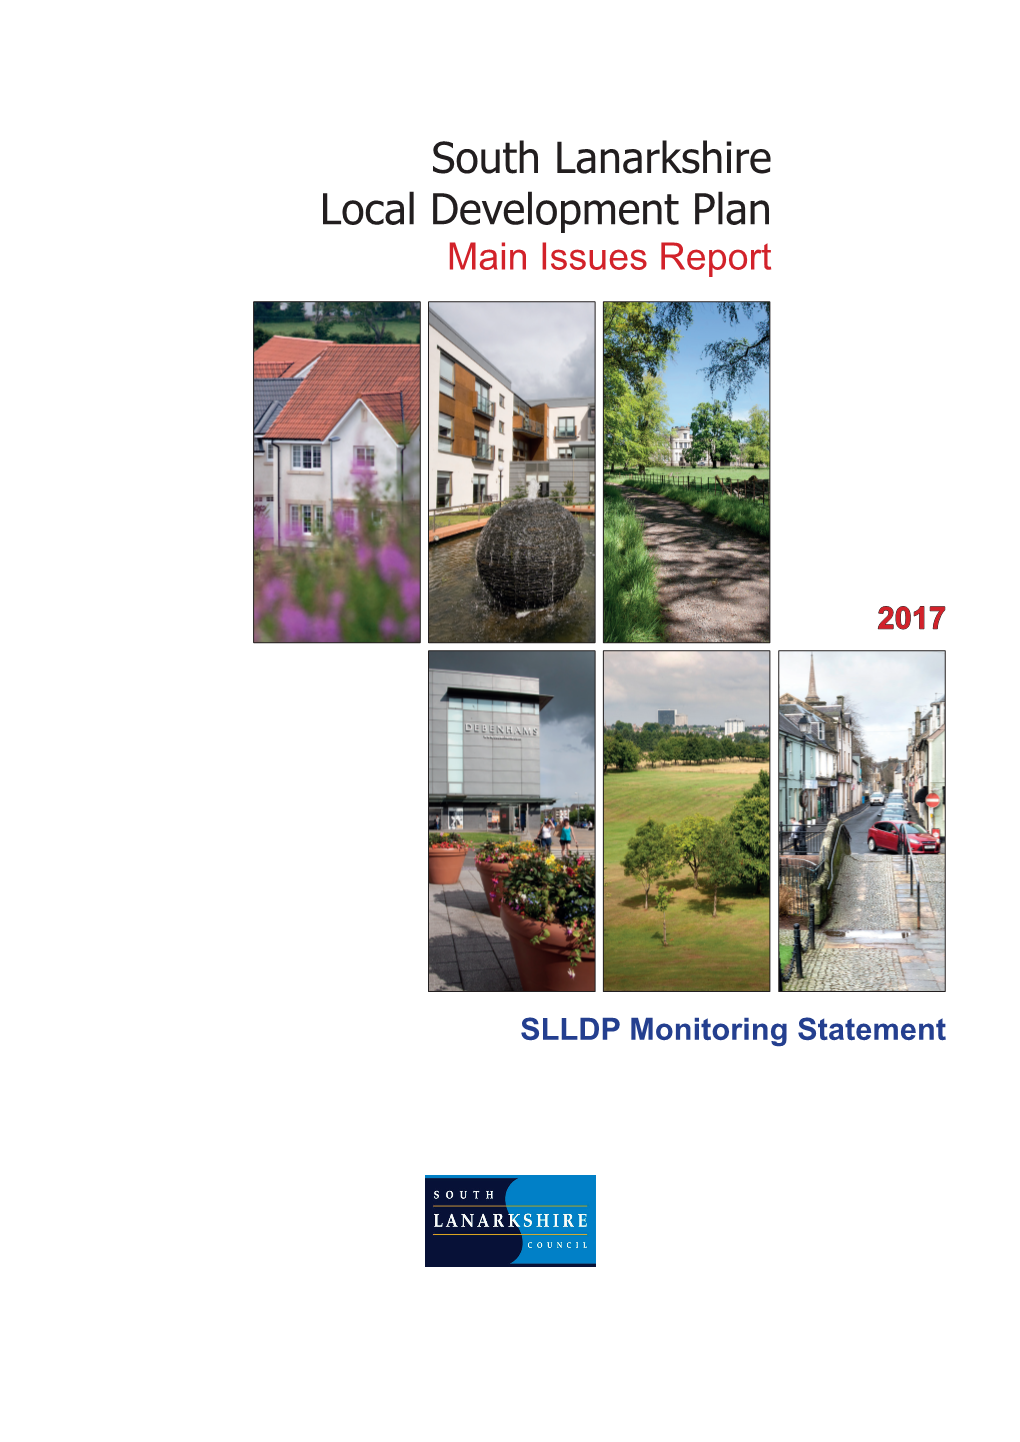 SLLDP Monitoring Statement